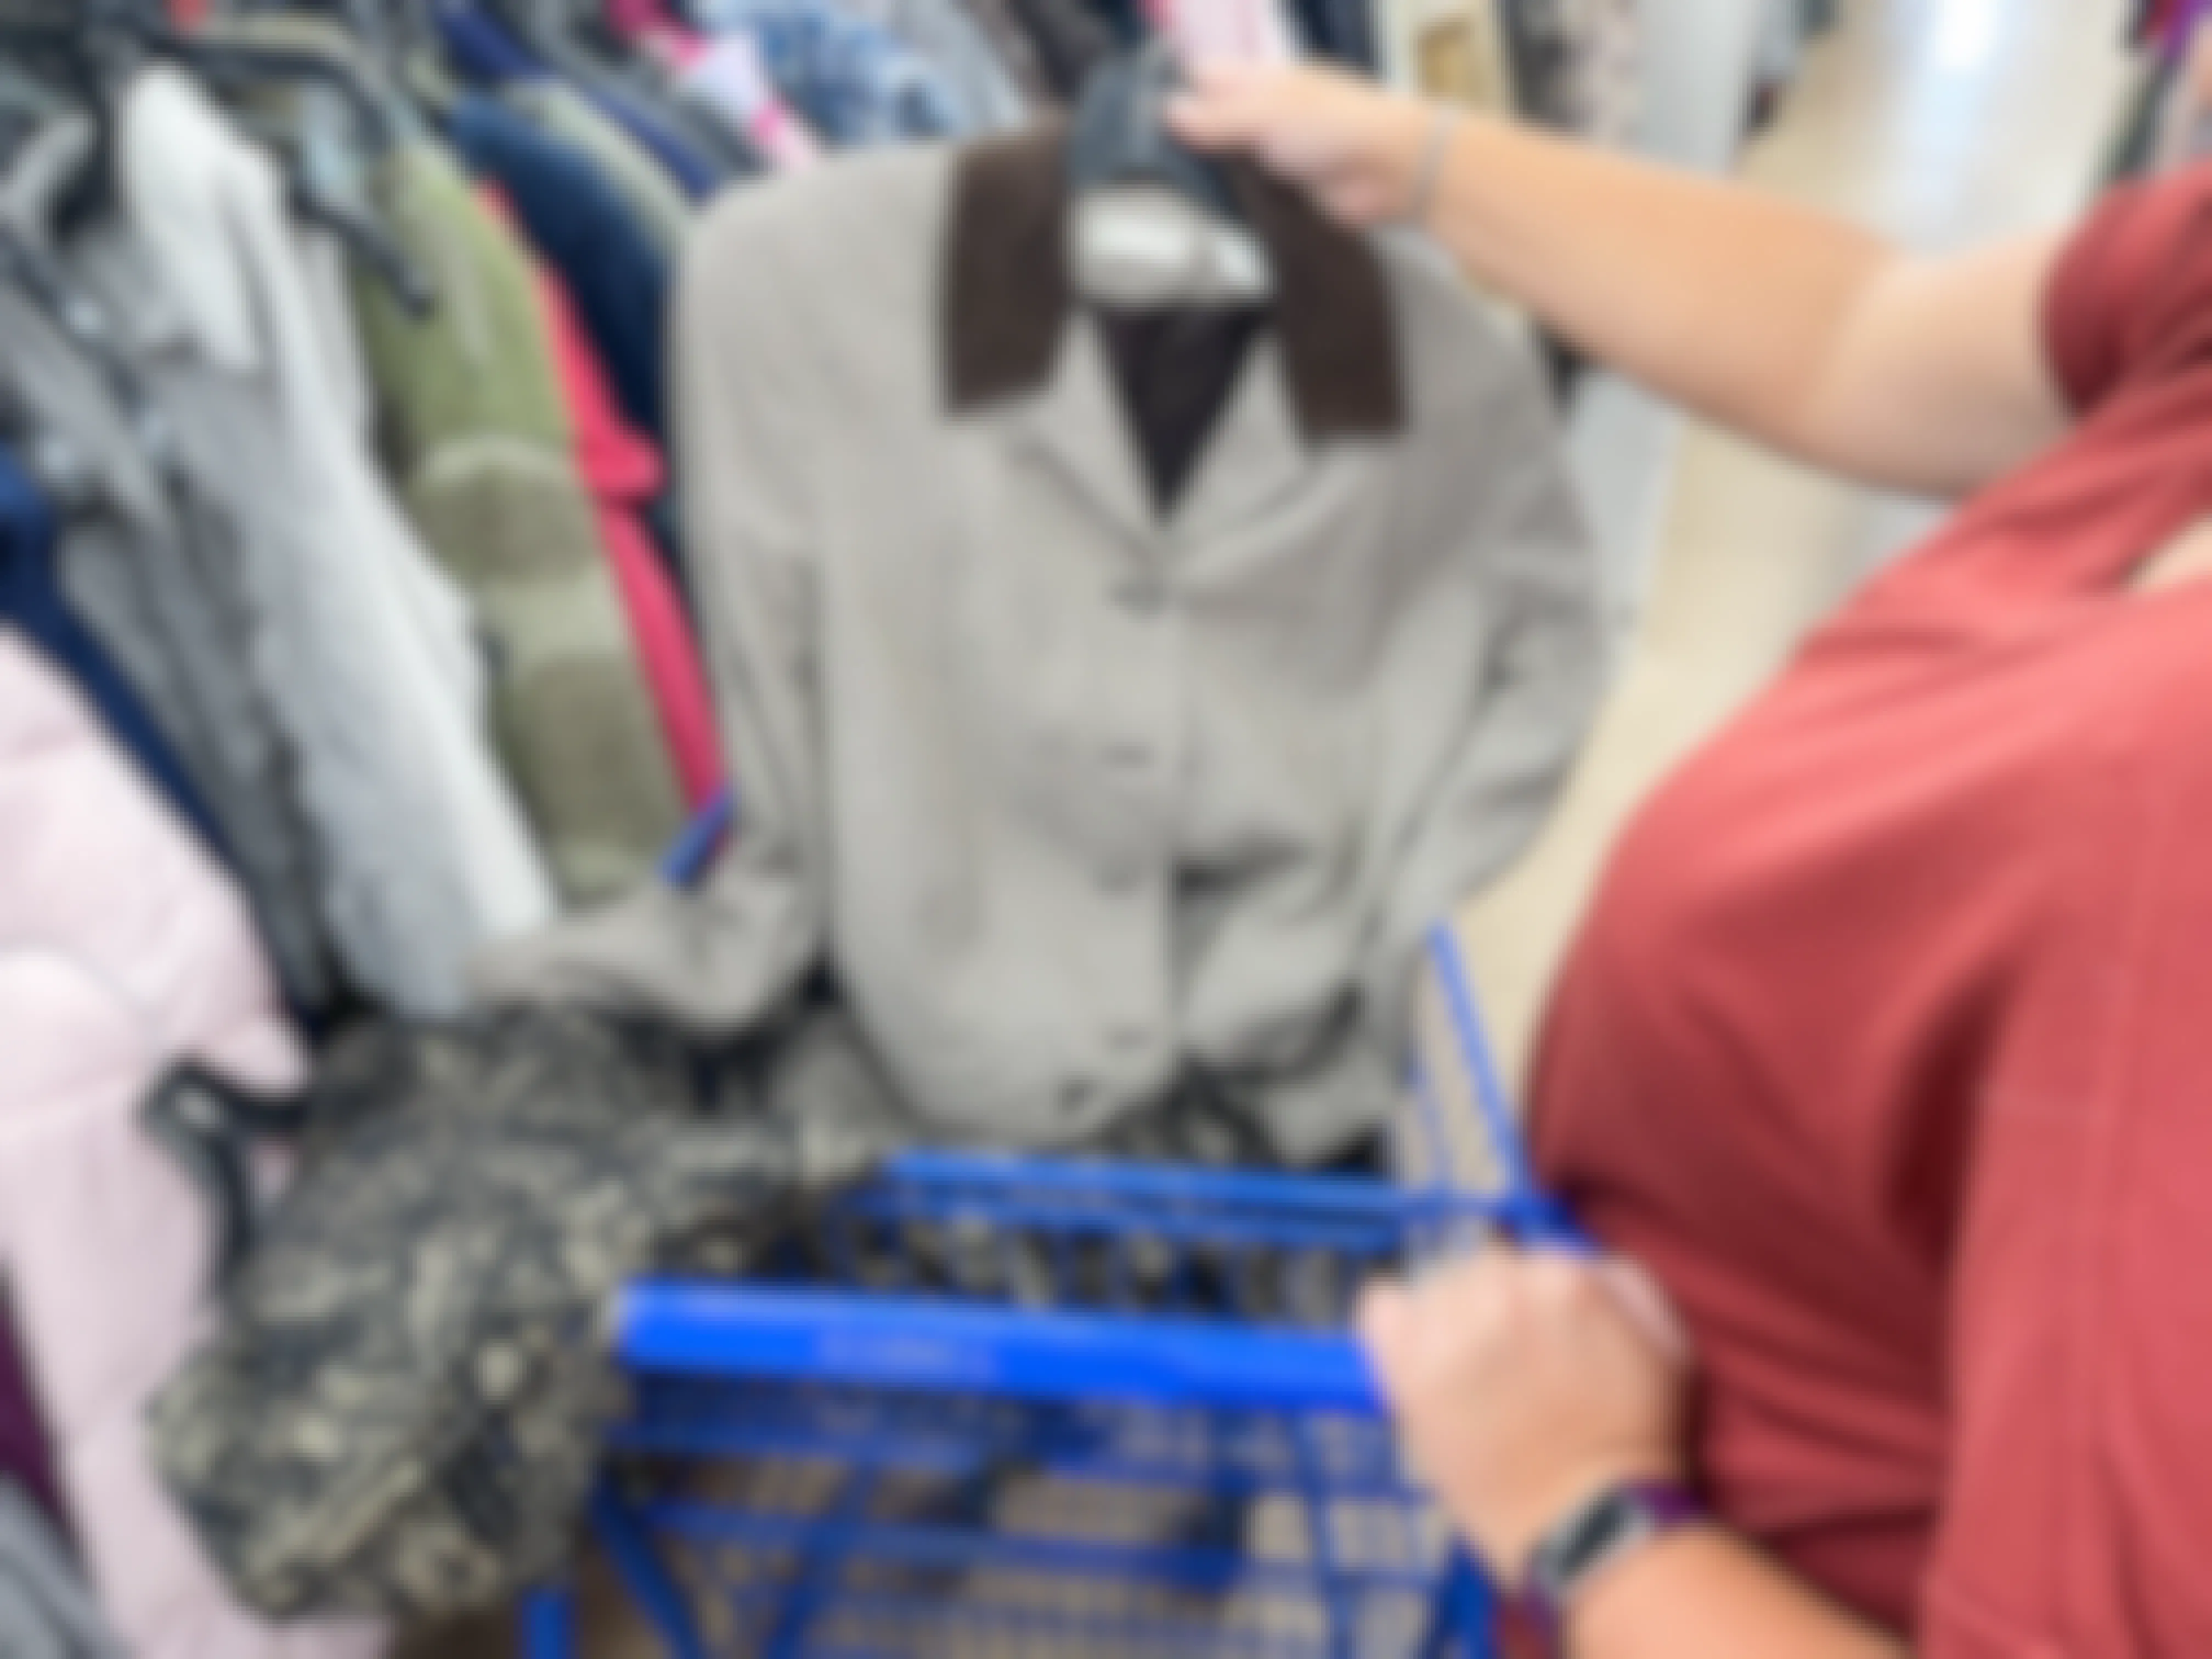 a woman shopping at goodwill looking at a blazer